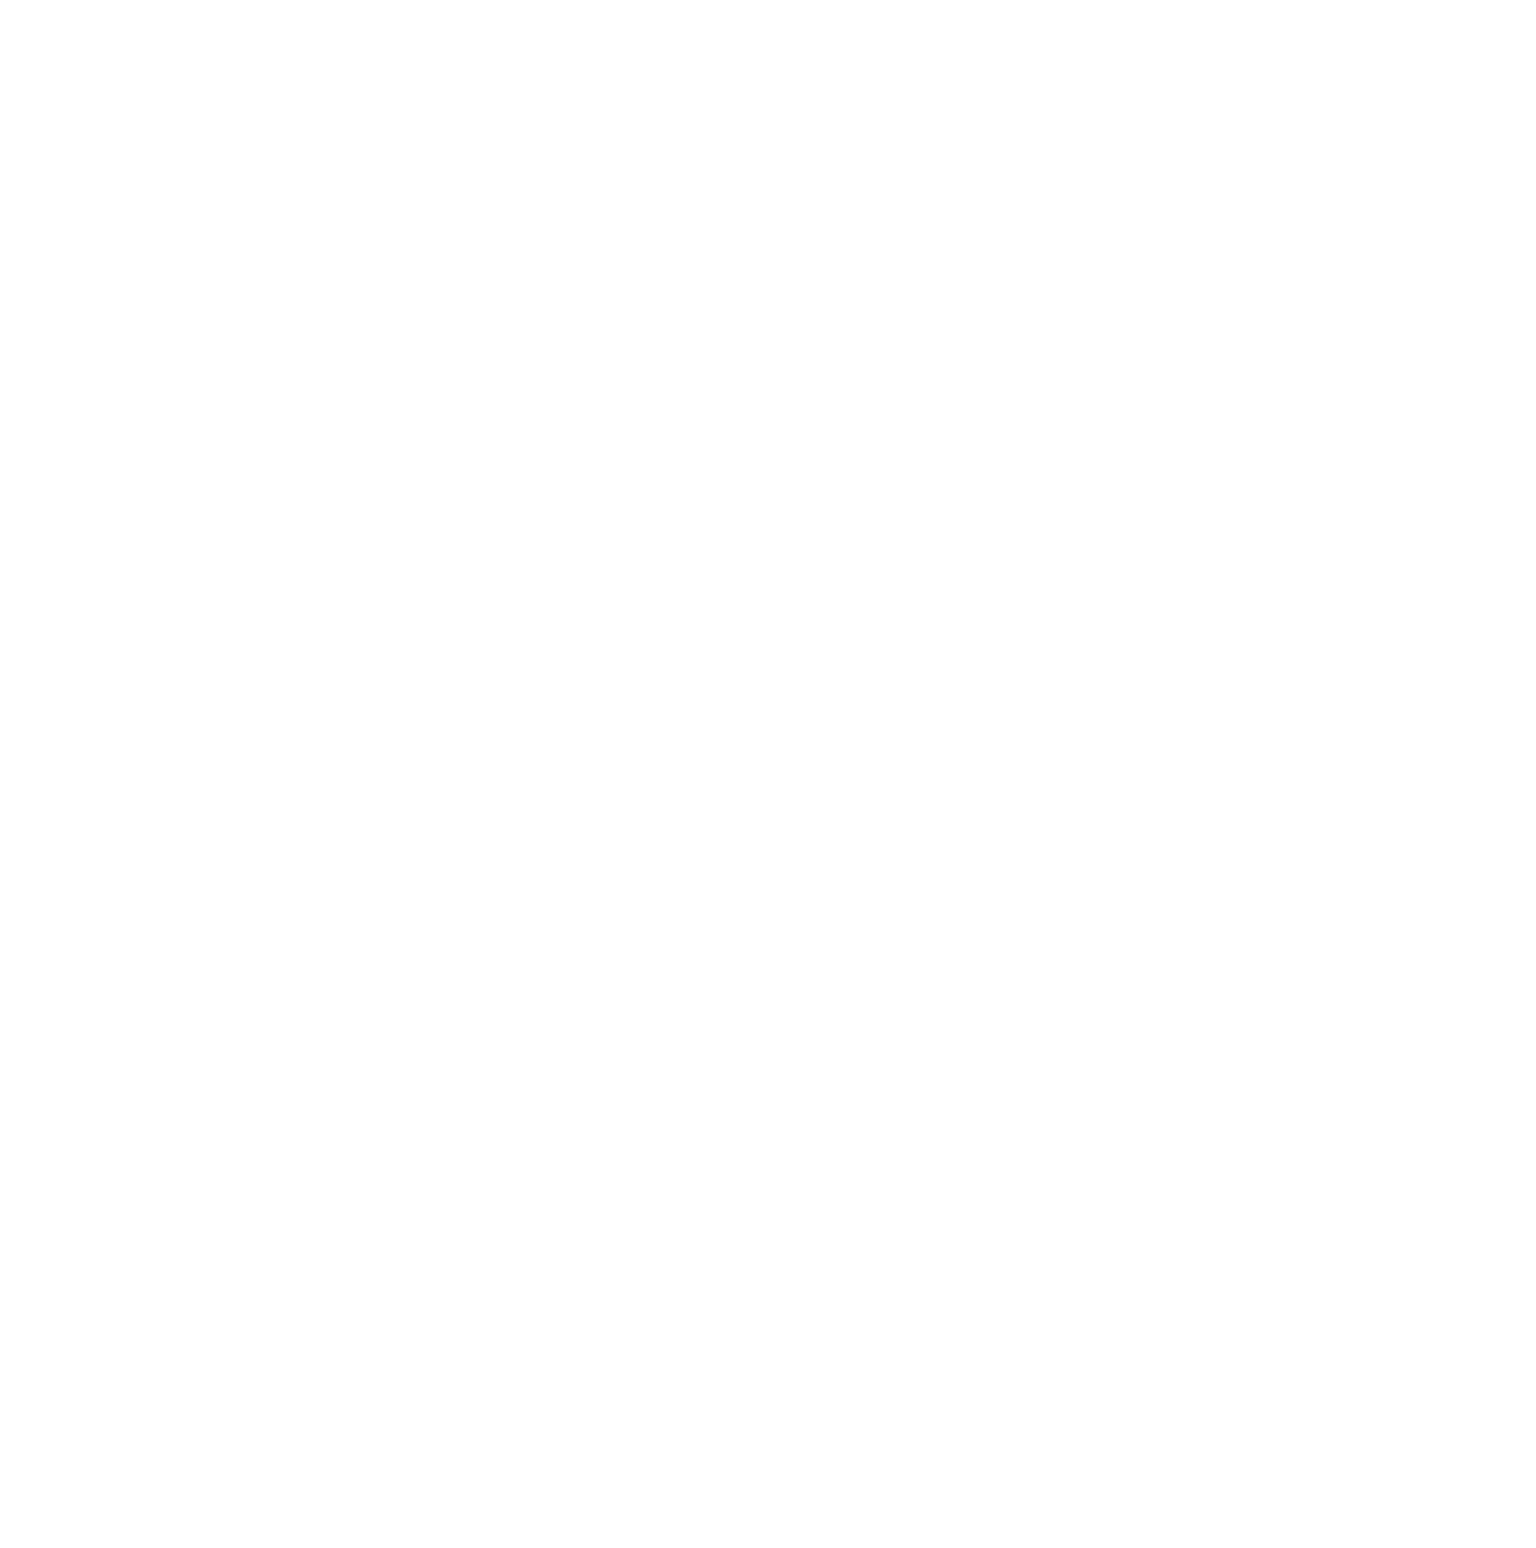 Alumina Limited logo pour fonds sombres (PNG transparent)